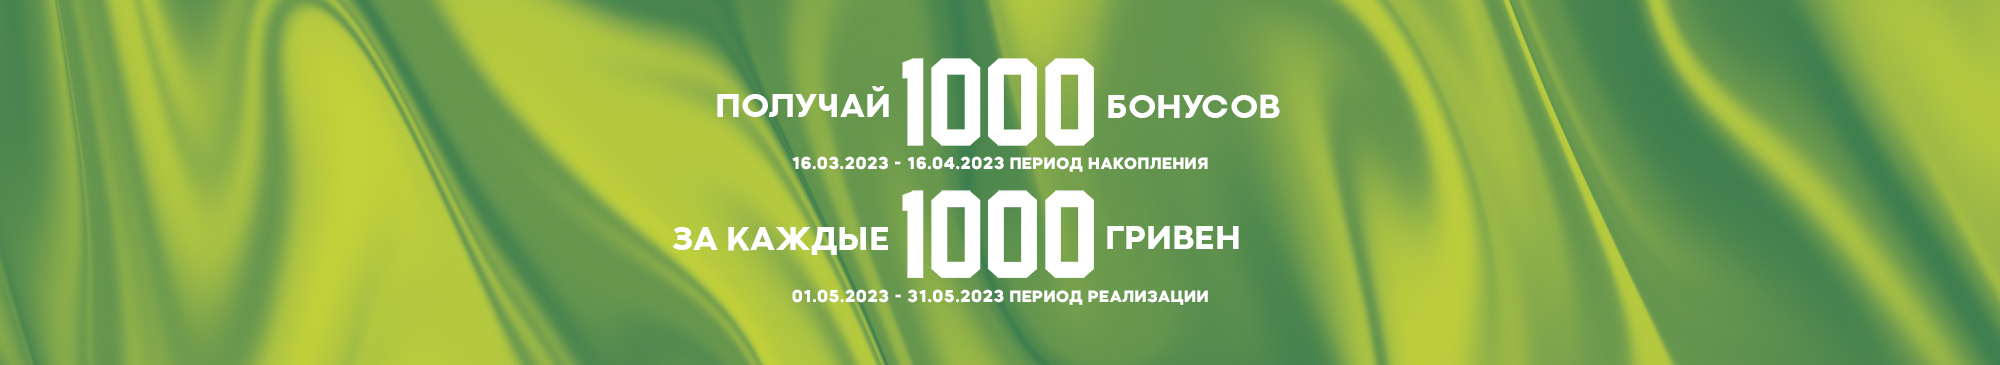 1000 бонусов за 1000 грн. 16.03-16.04 - MEGASPORT